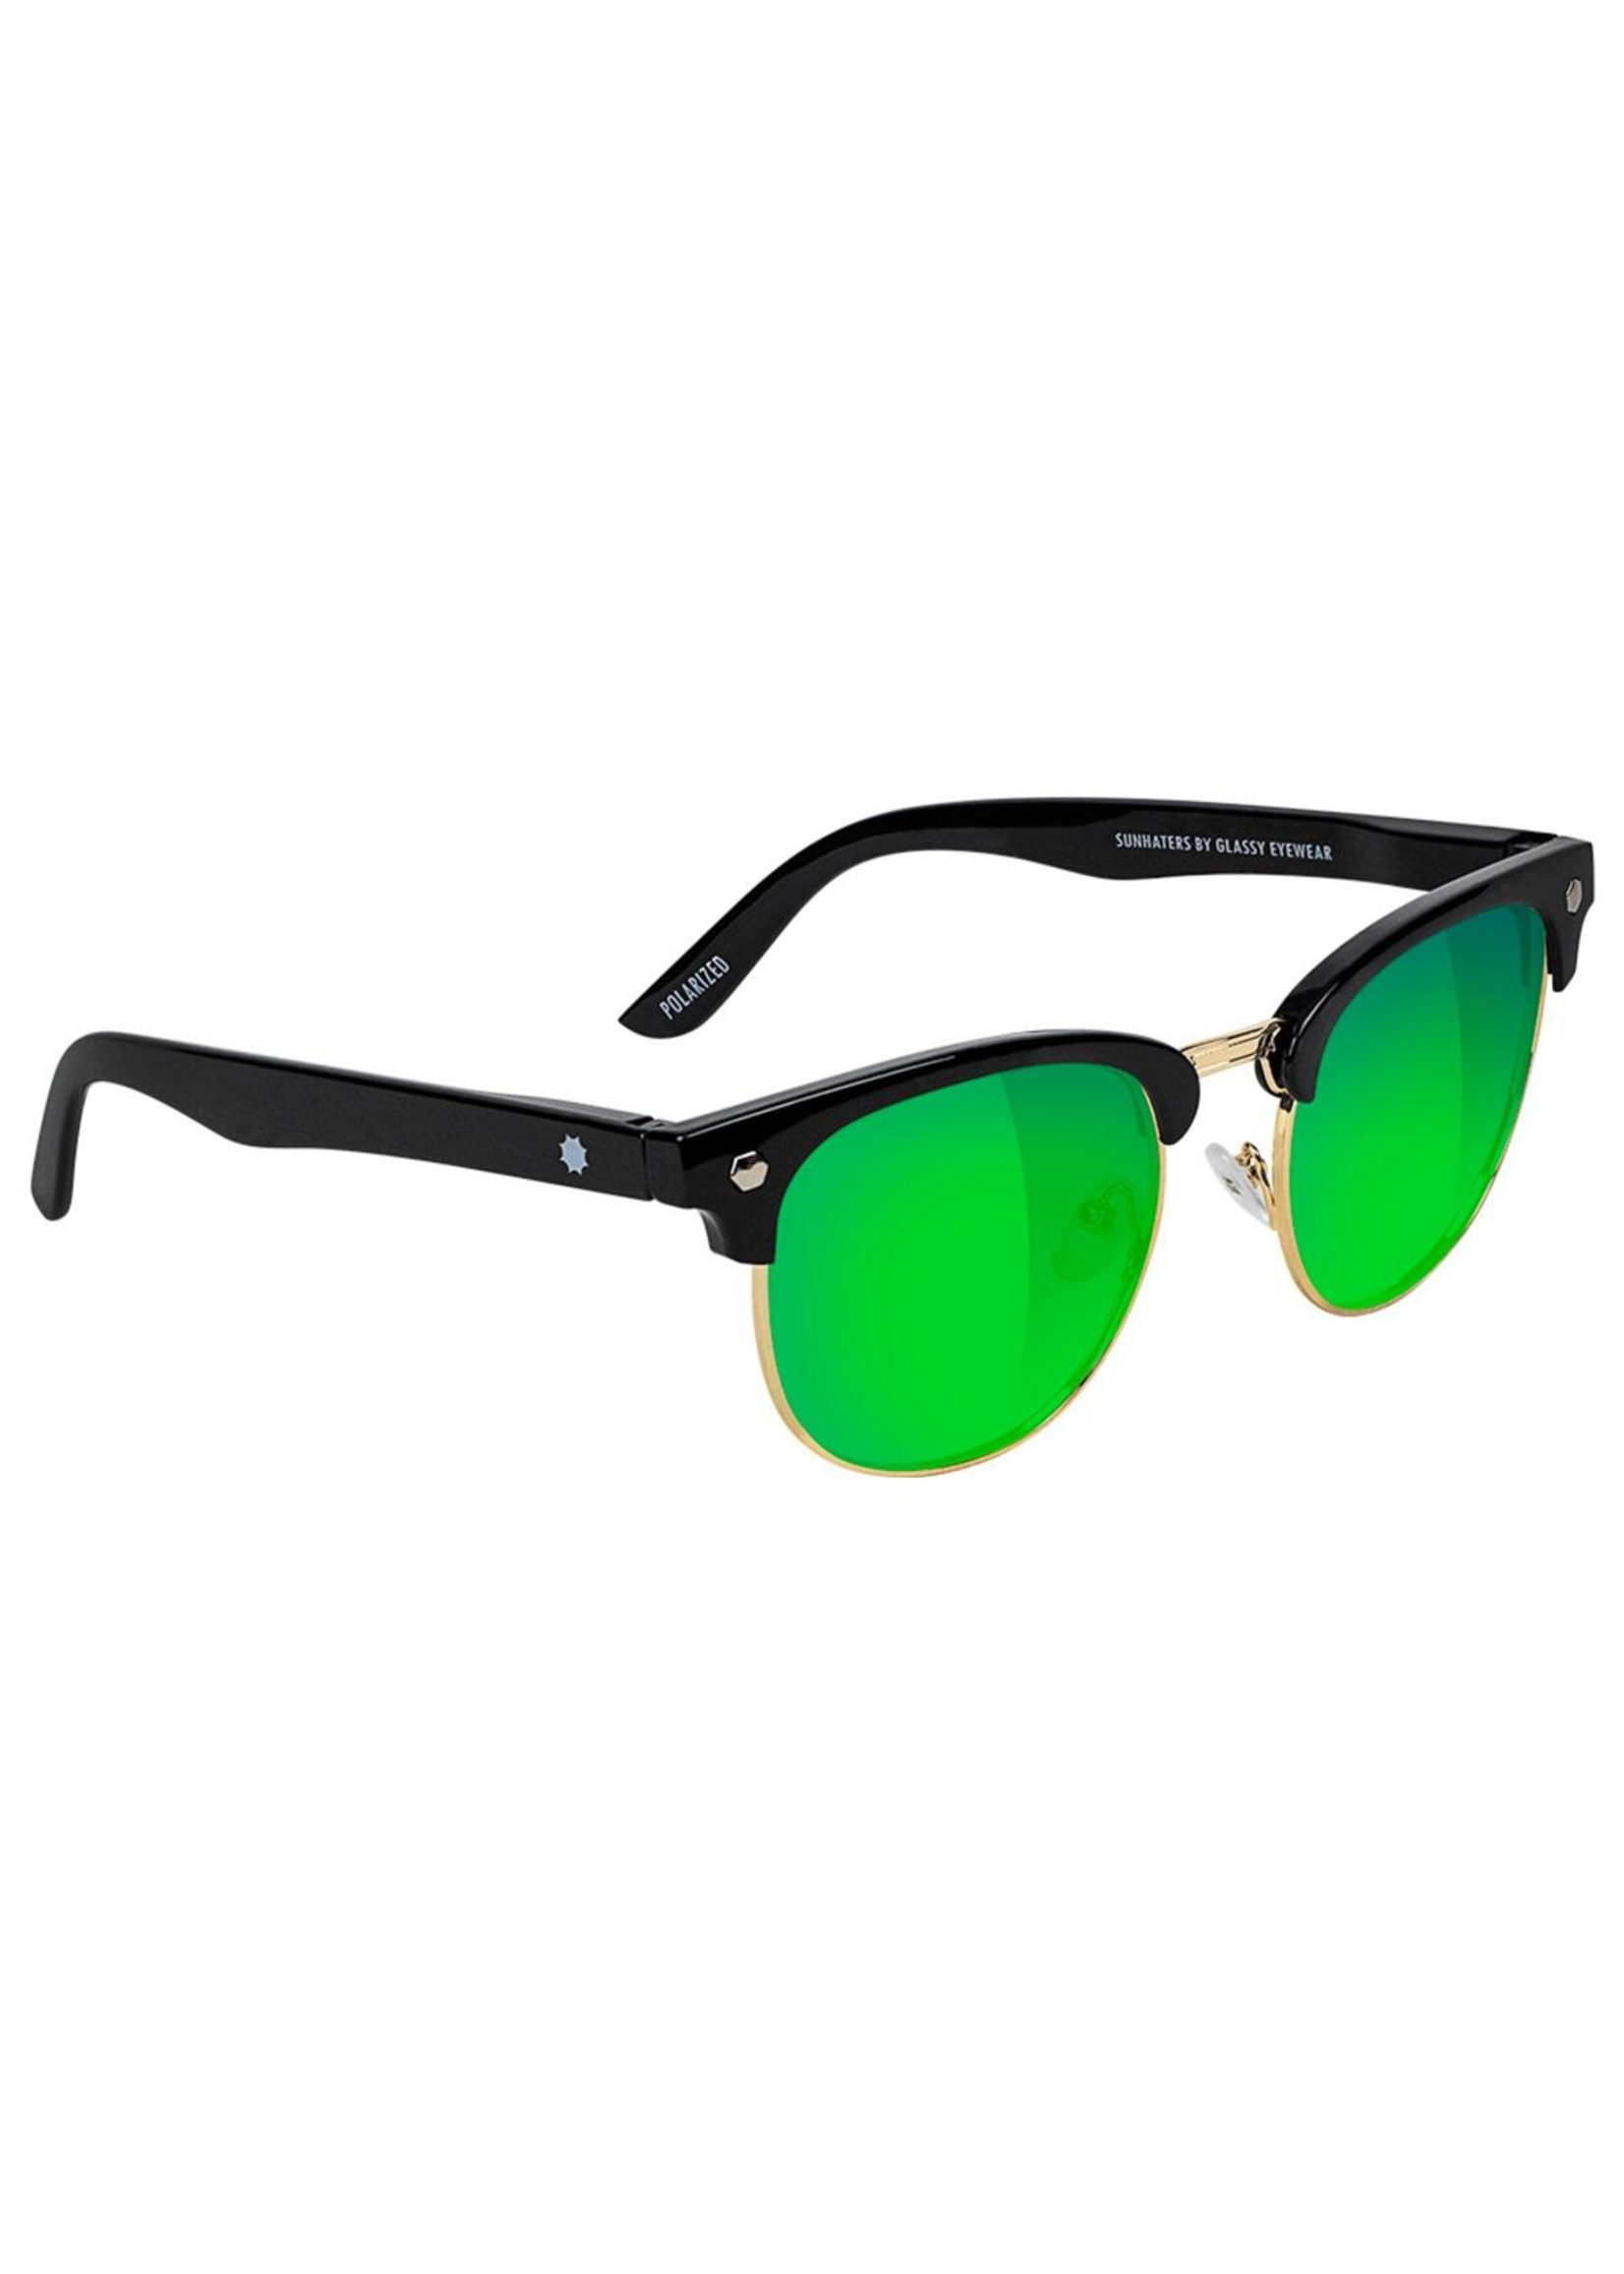 Glassy Eyewear Morrison - Black/Green Mirror